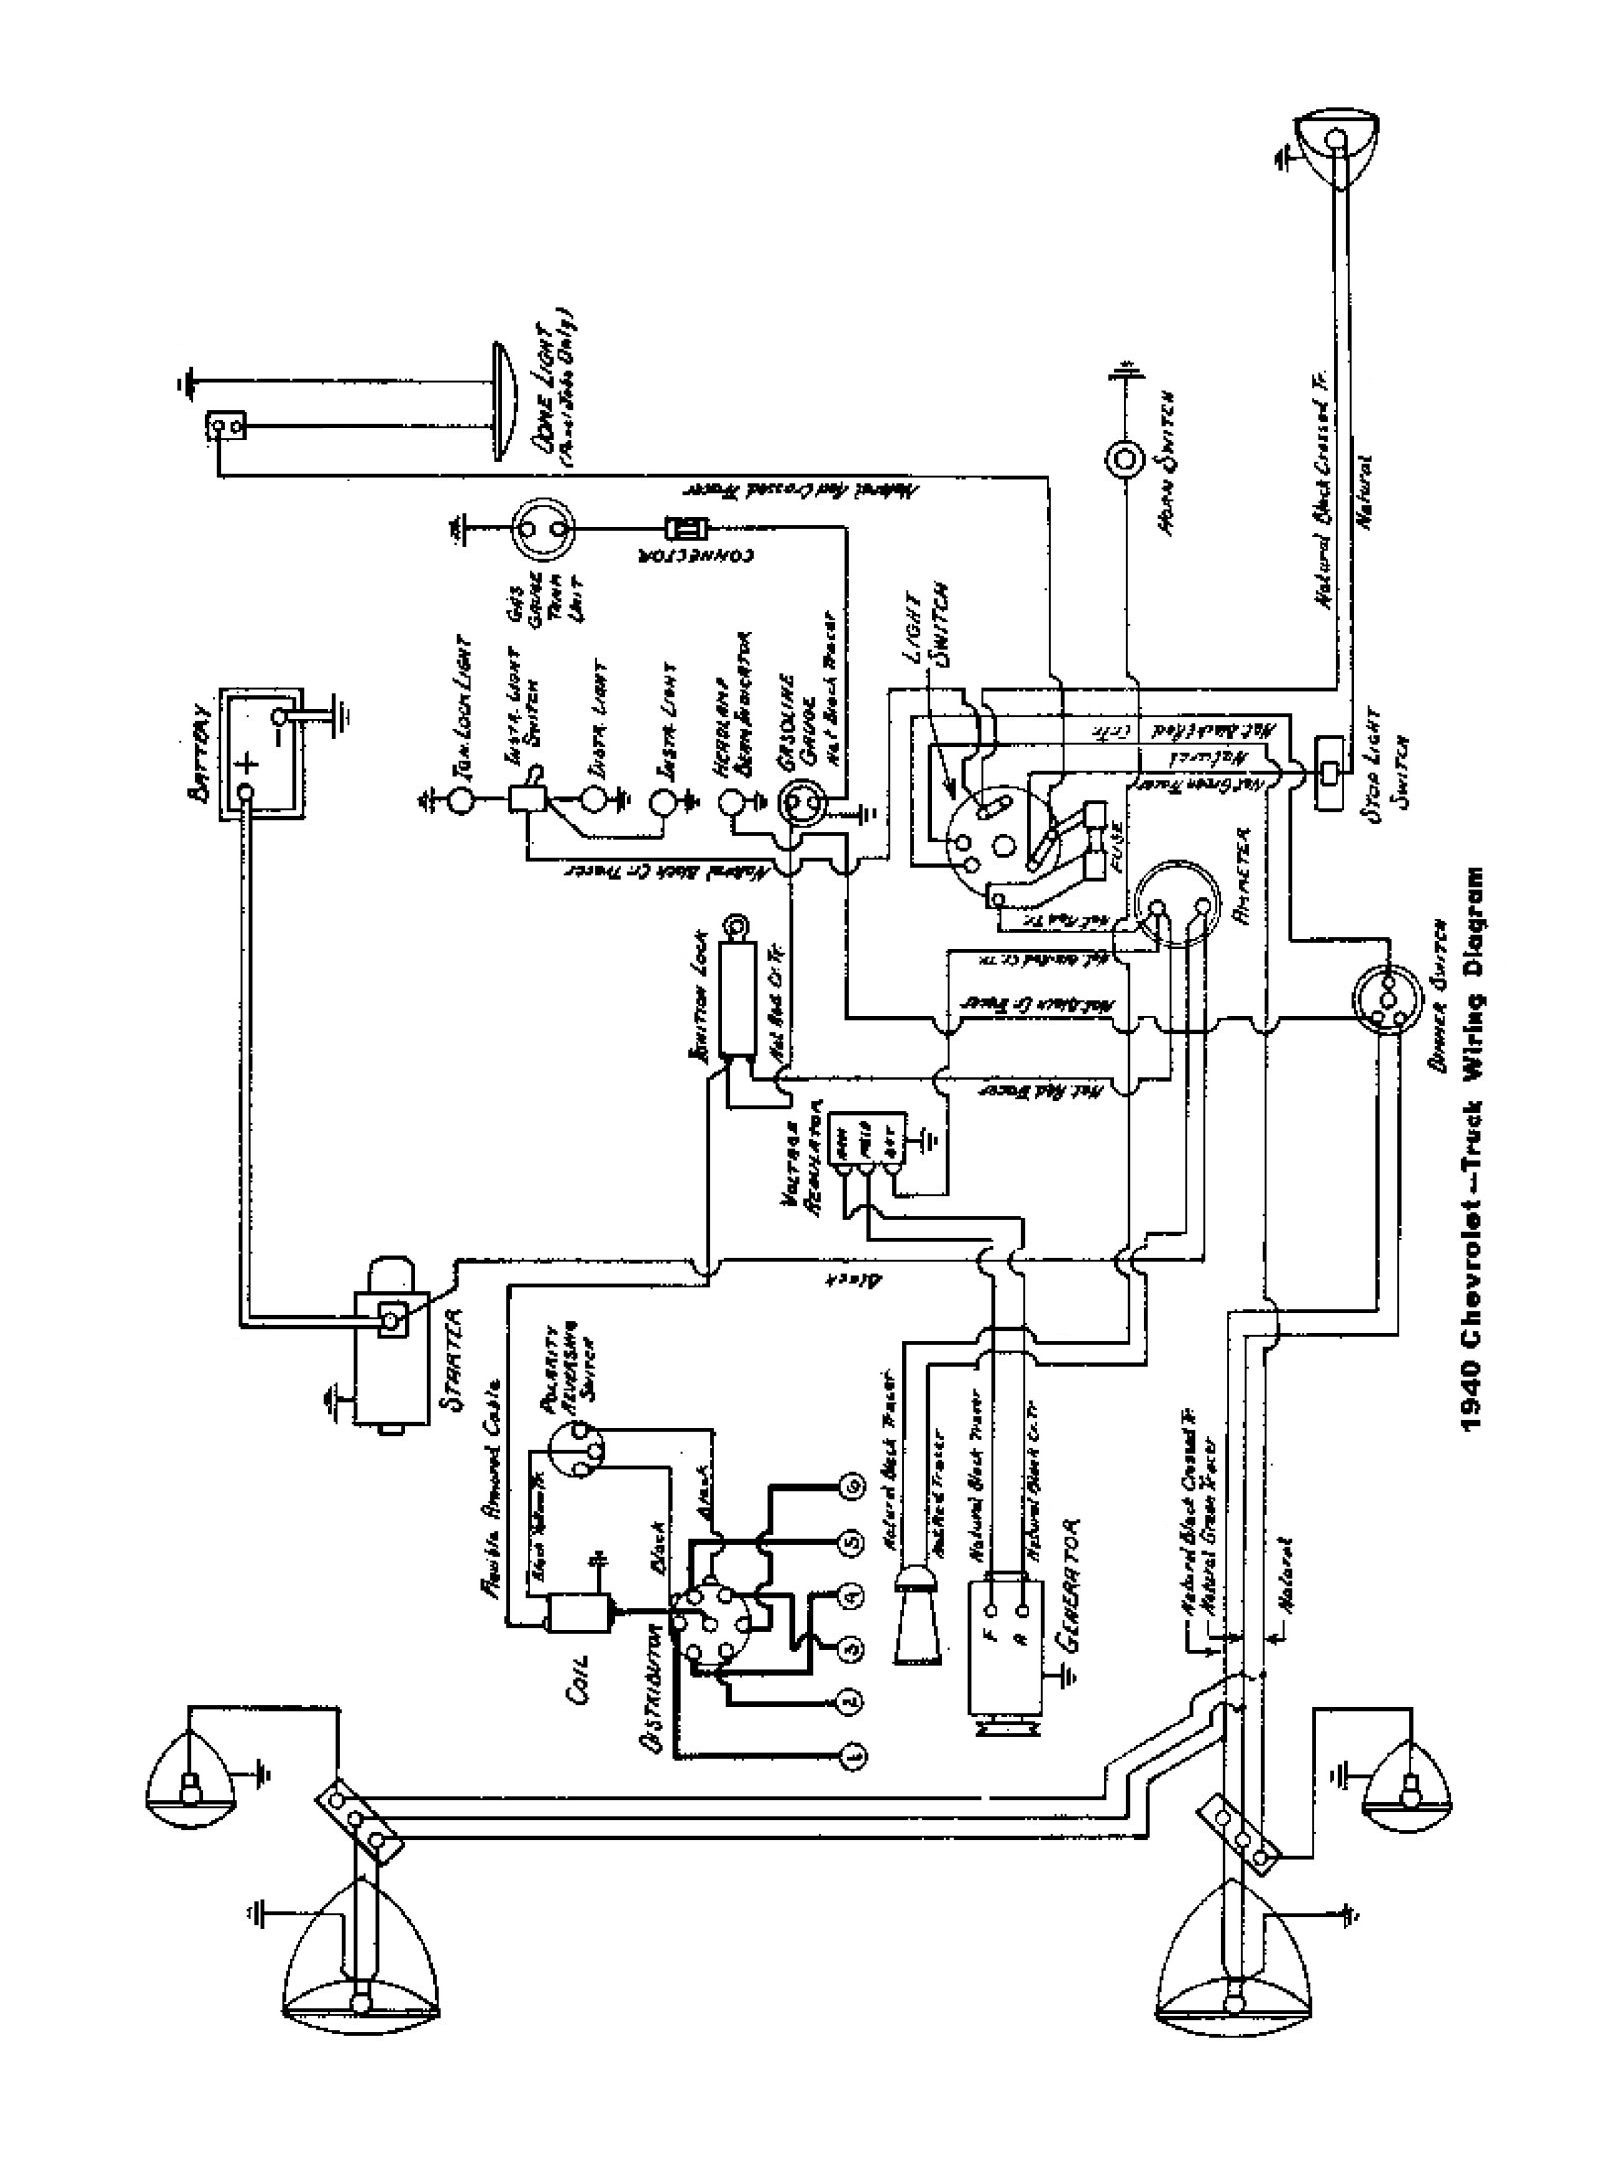 1962 Chevy Truck Wiring Diagram Chevy Wiring Diagrams Of 1962 Chevy Truck Wiring Diagram